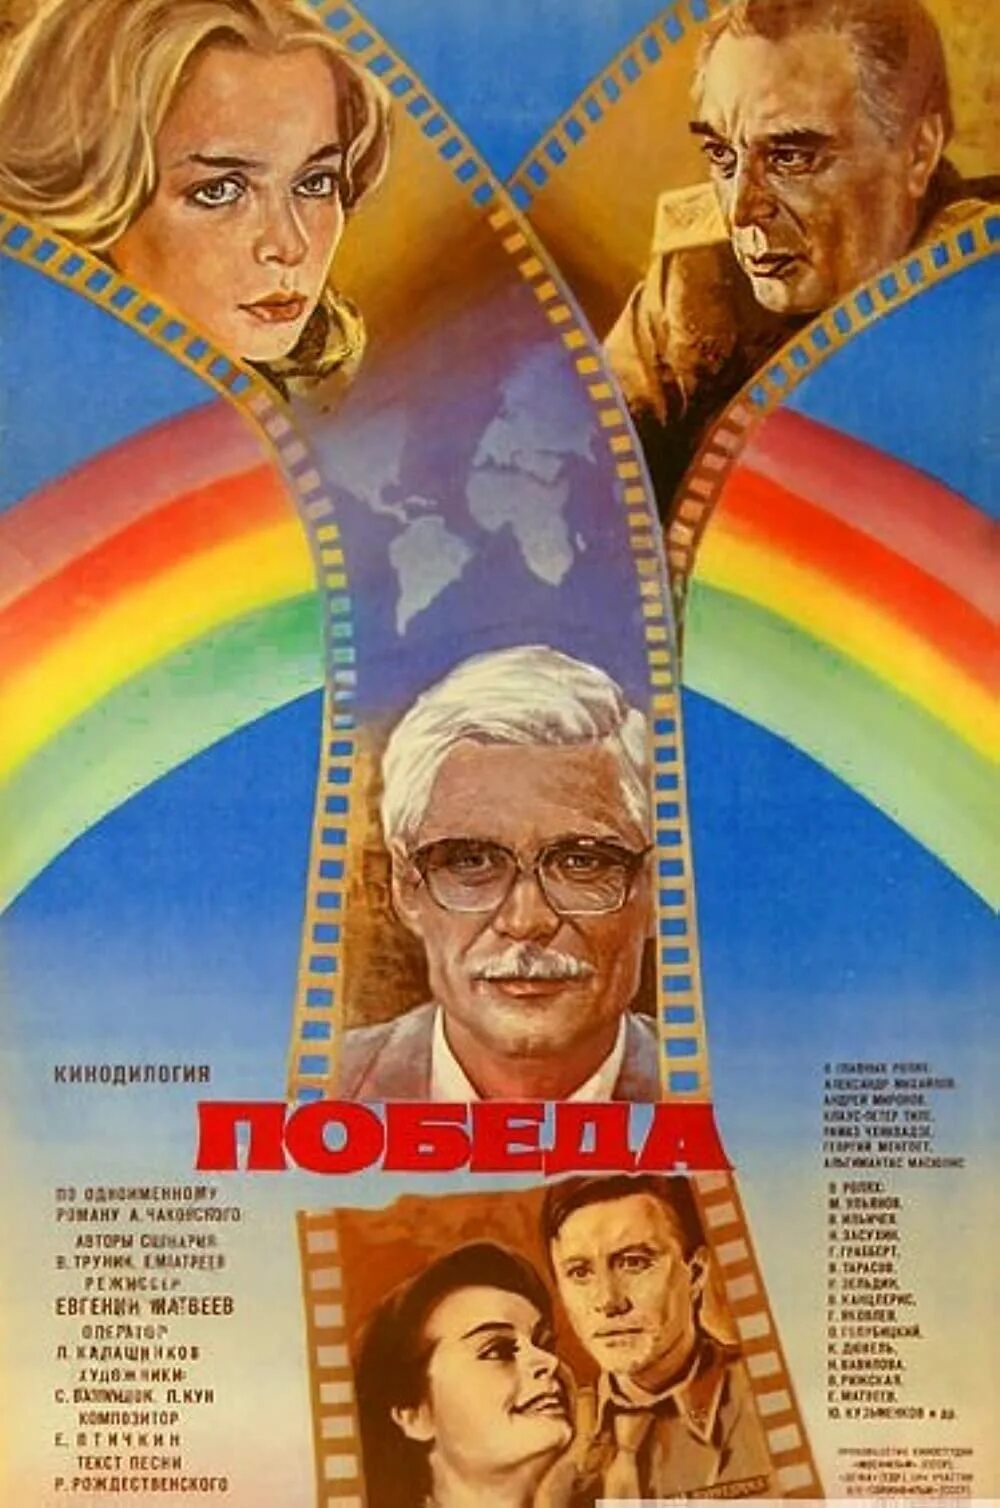 1984 Плакат. Кинофильмы победа